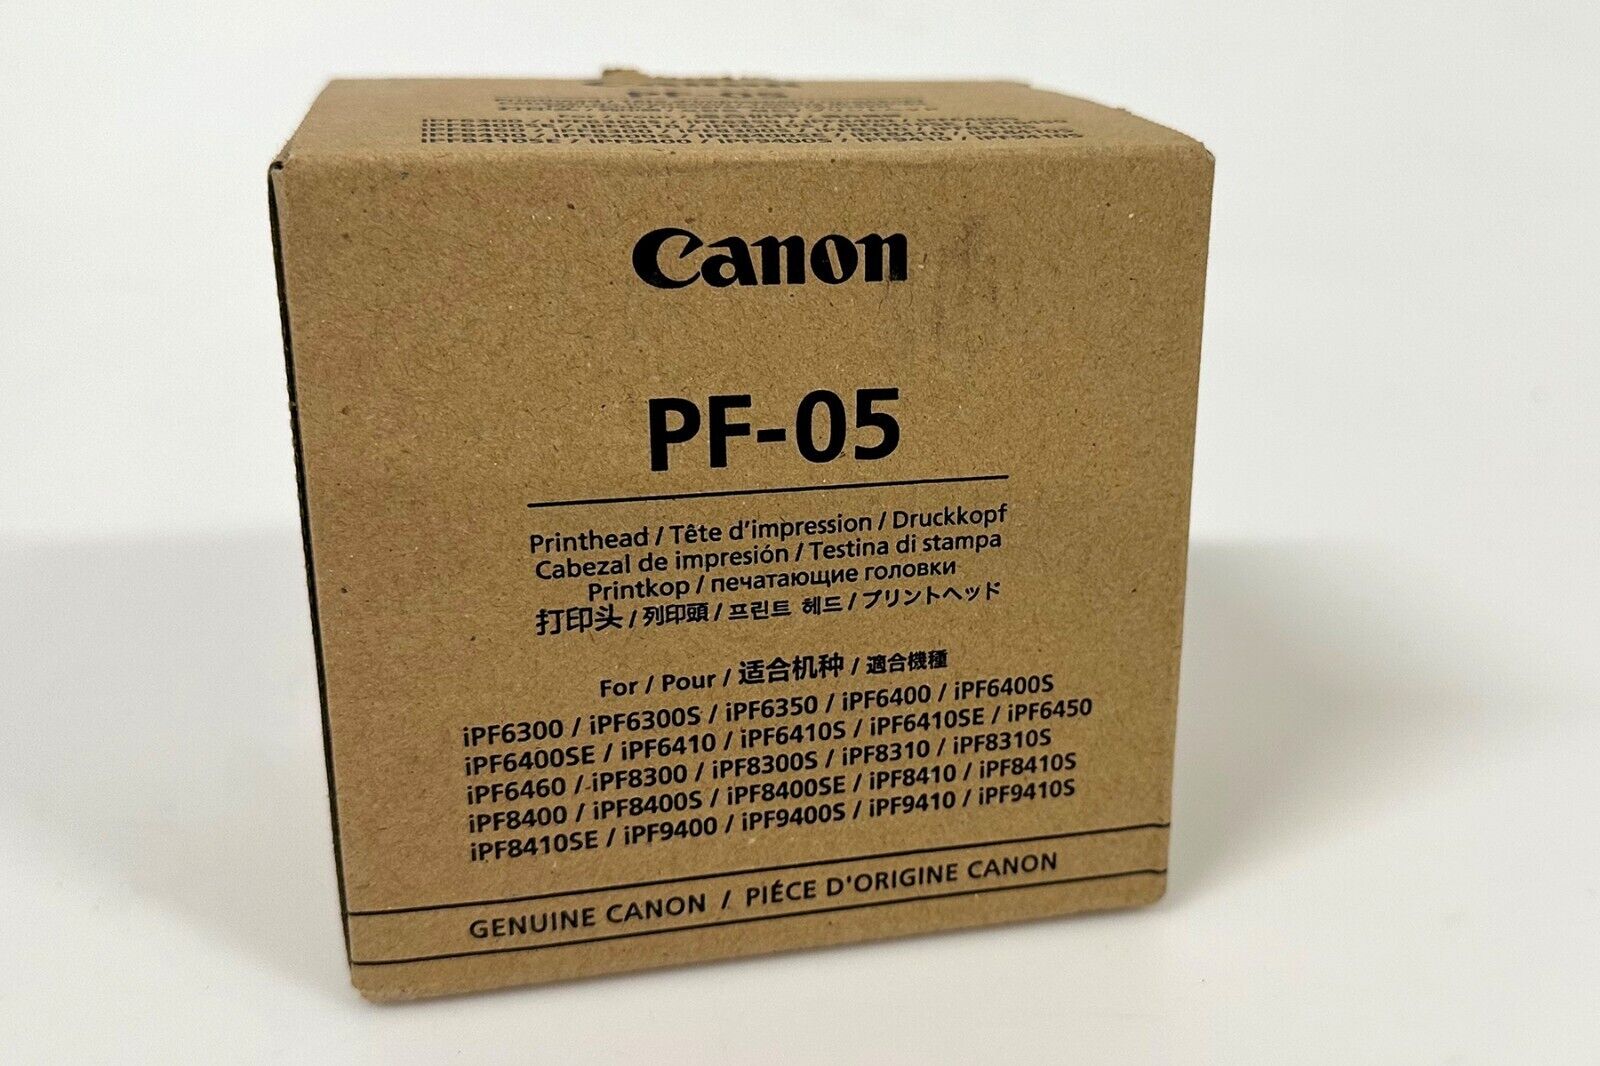  Brand New Genuine Canon PF-05 Print Head,  3872B003 original OEM.